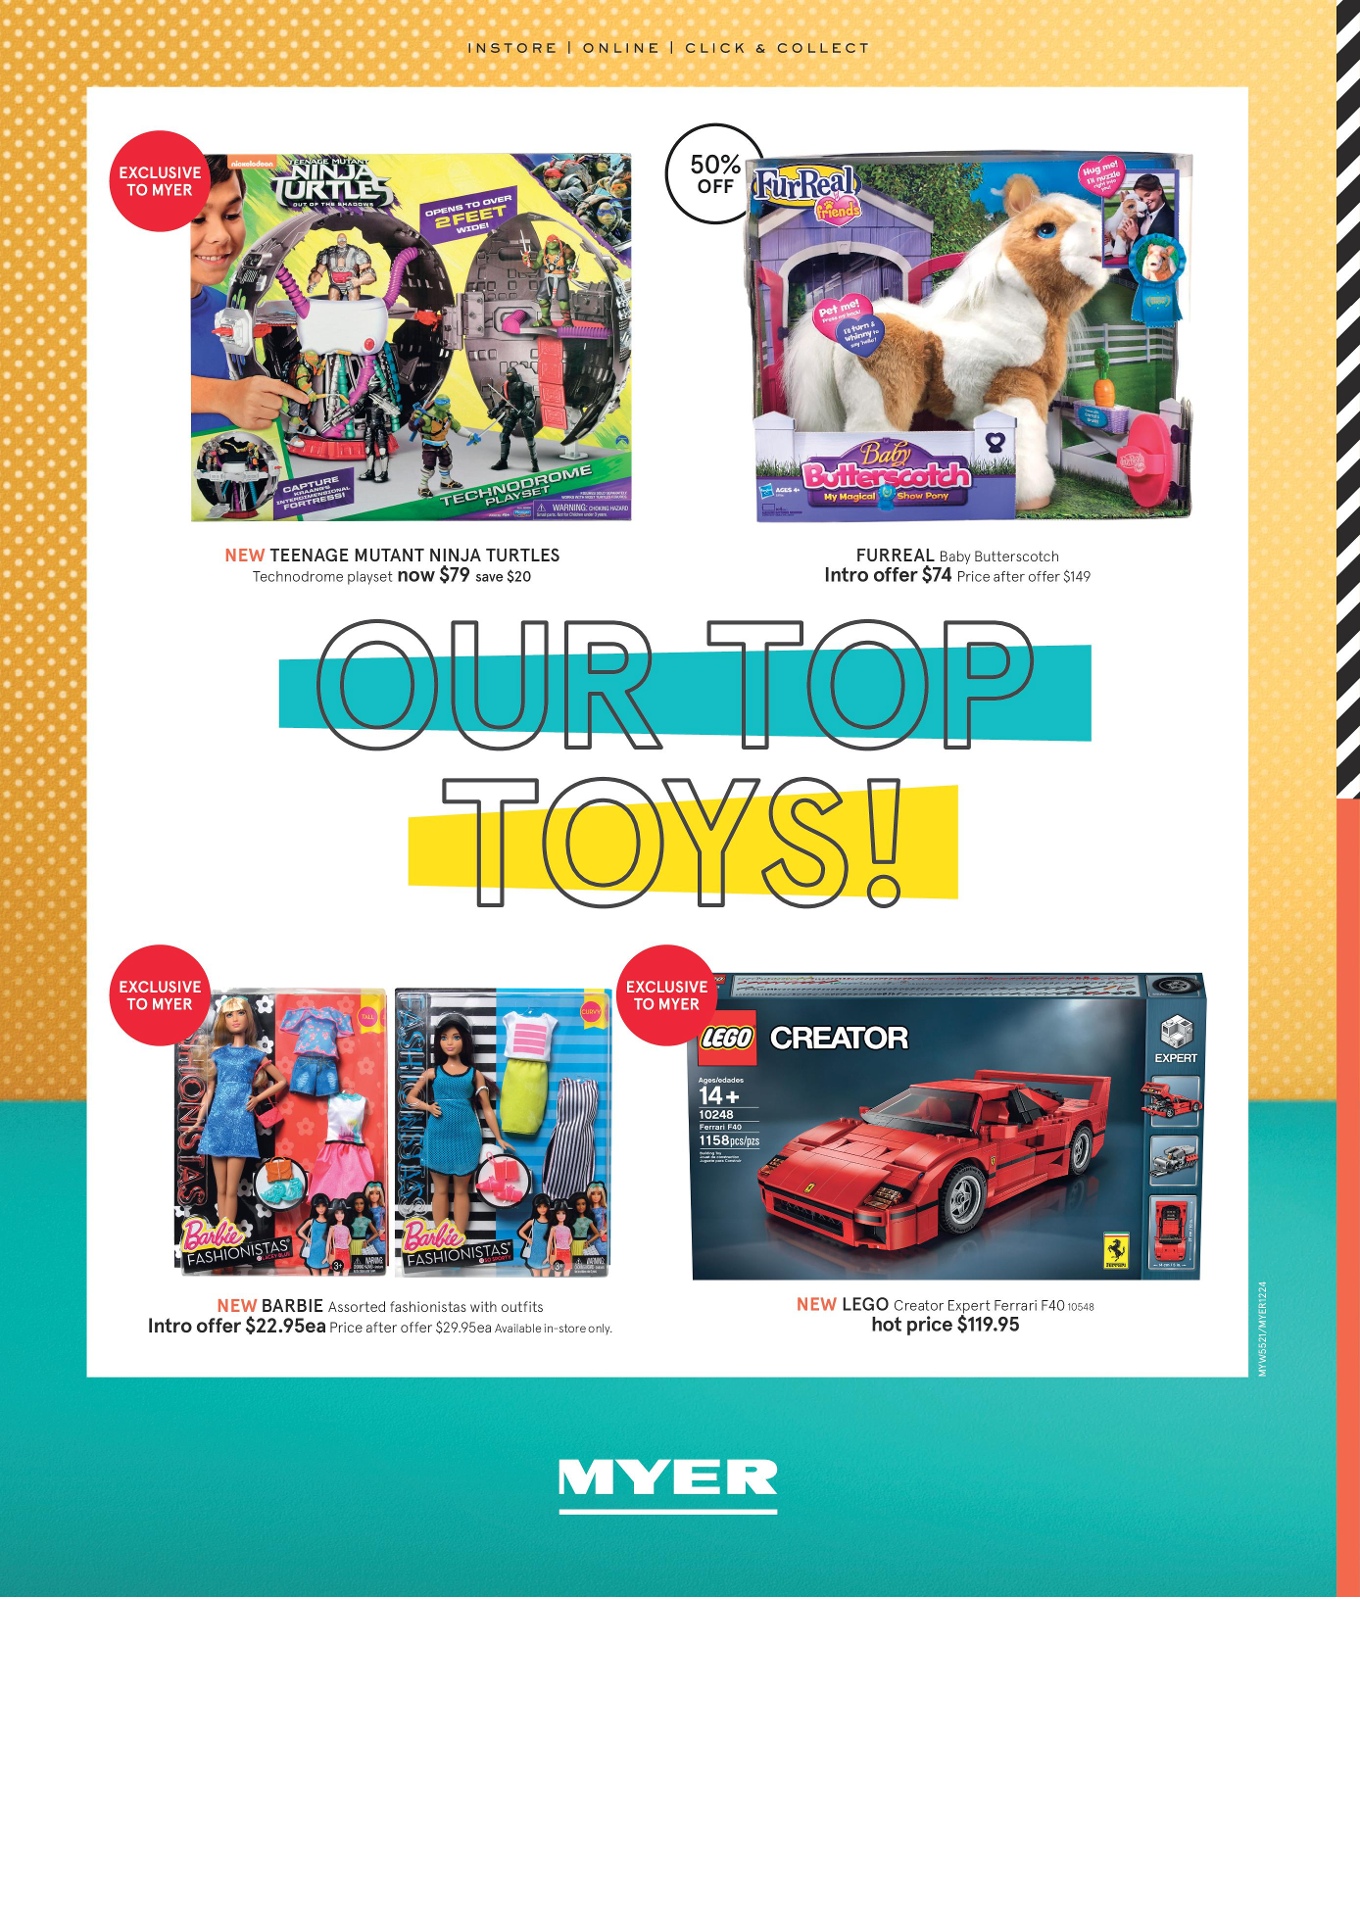 https://jaysbrickblog.com/wp-content/uploads/2016/06/Myer-Toy-Sale-2016-LEGO-Catalogue-Ferrari-F40.jpg